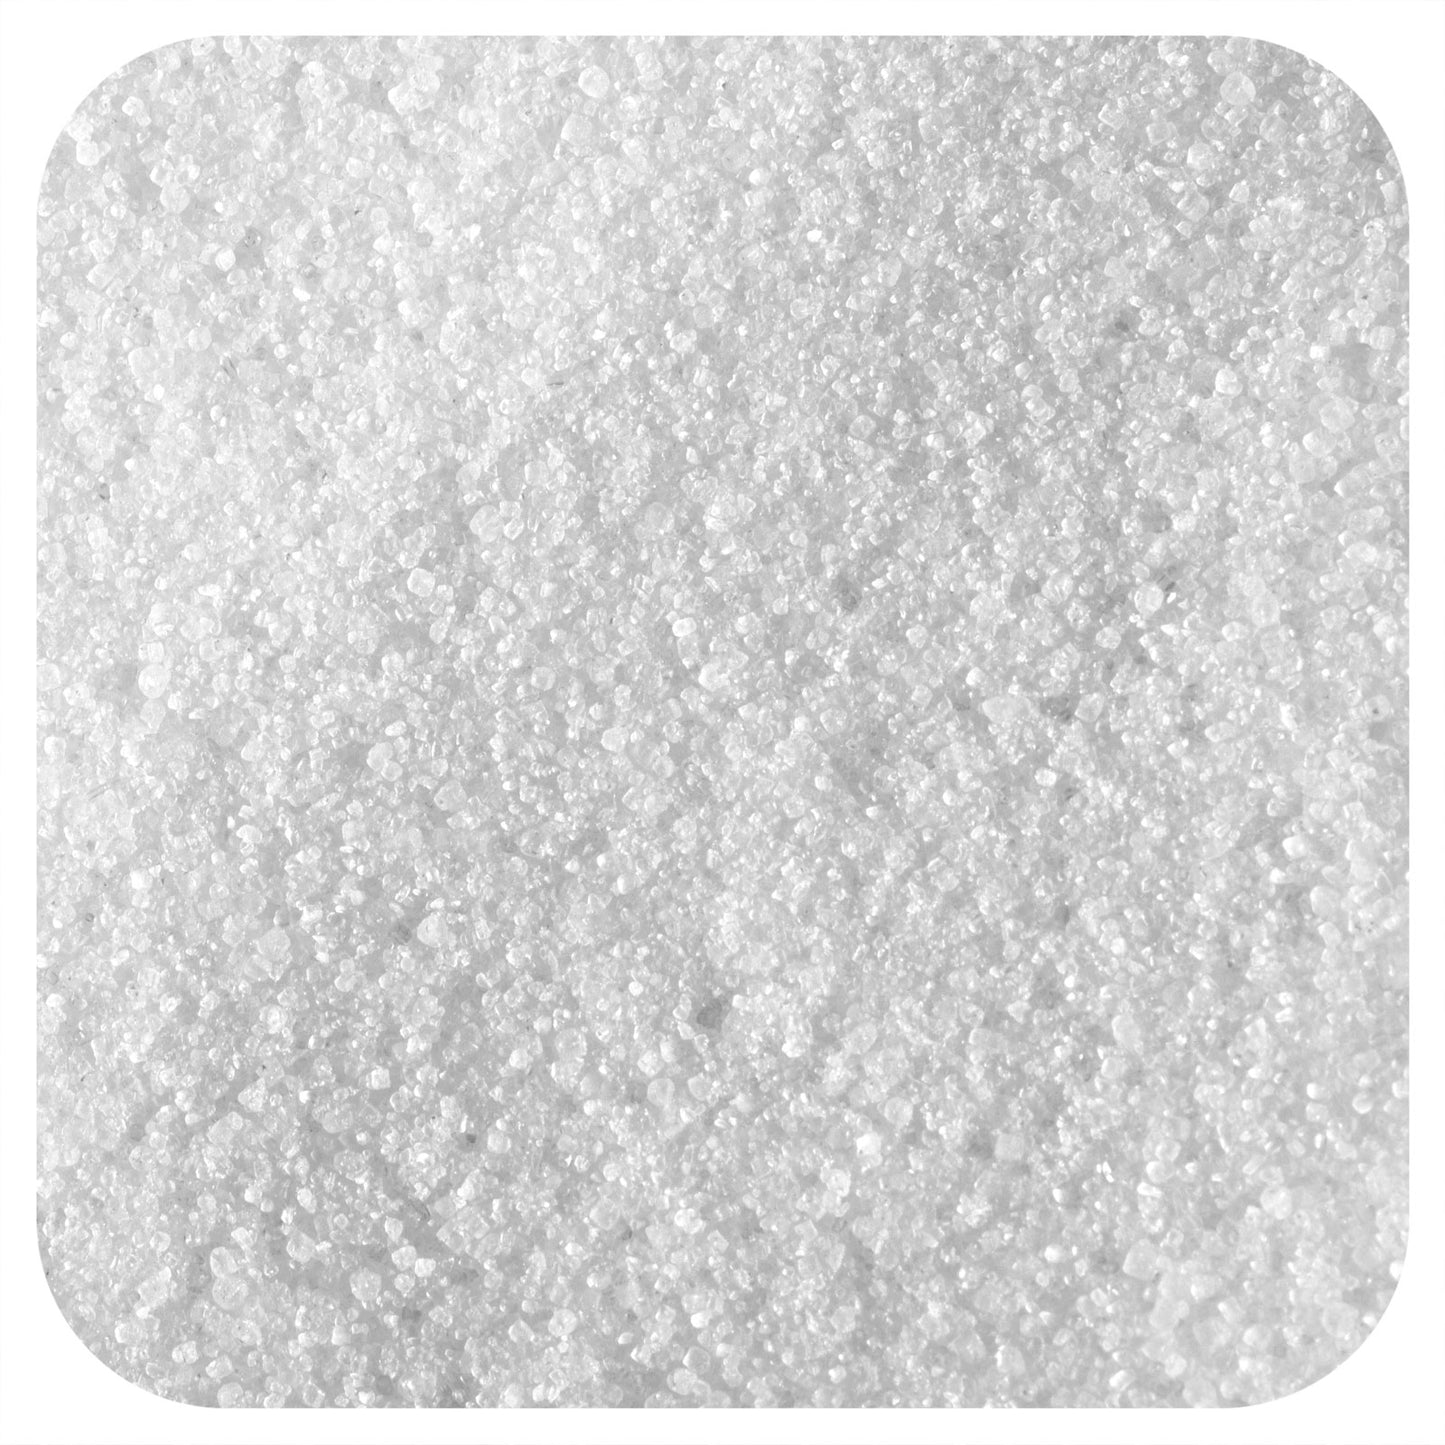 California Gold Nutrition, FOODS - Light Sea Salt, 6.2 oz (175 g)